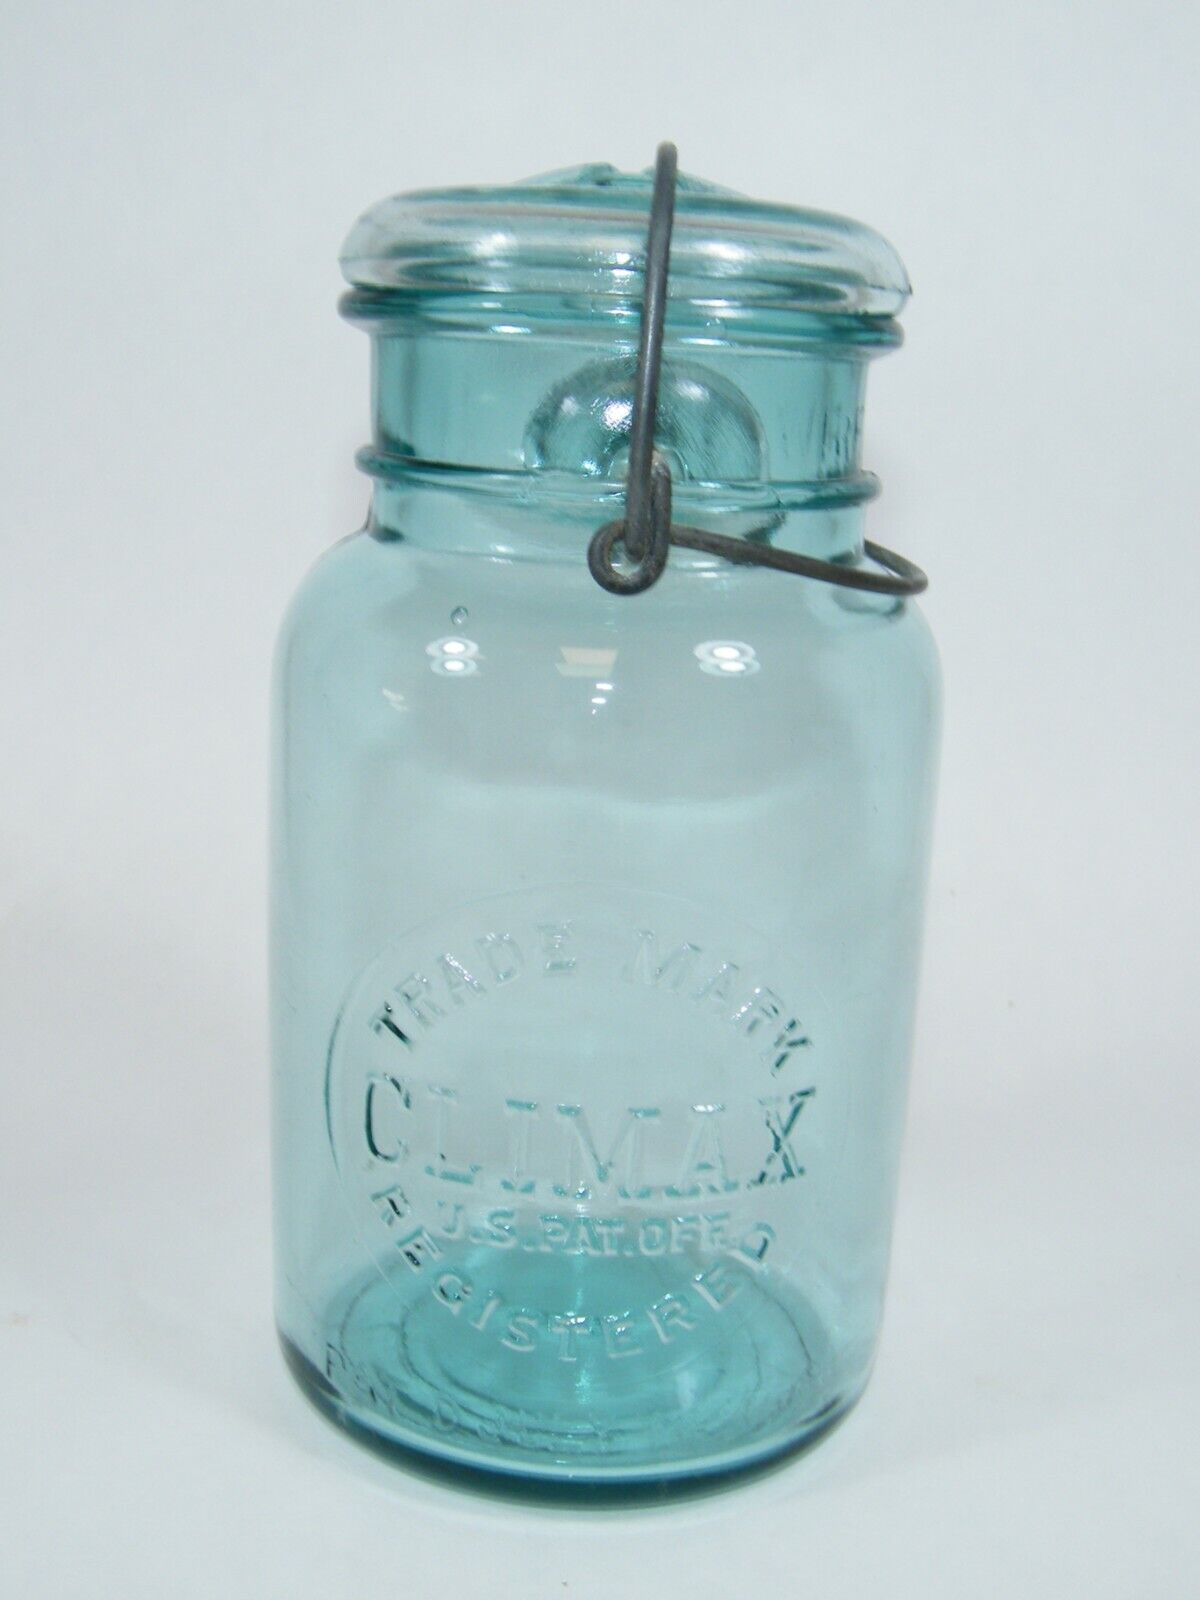 CLIMAX TRADE MARK REGISTERED JULY 14 1908 AQUA BLUE GLASS MASON JAR